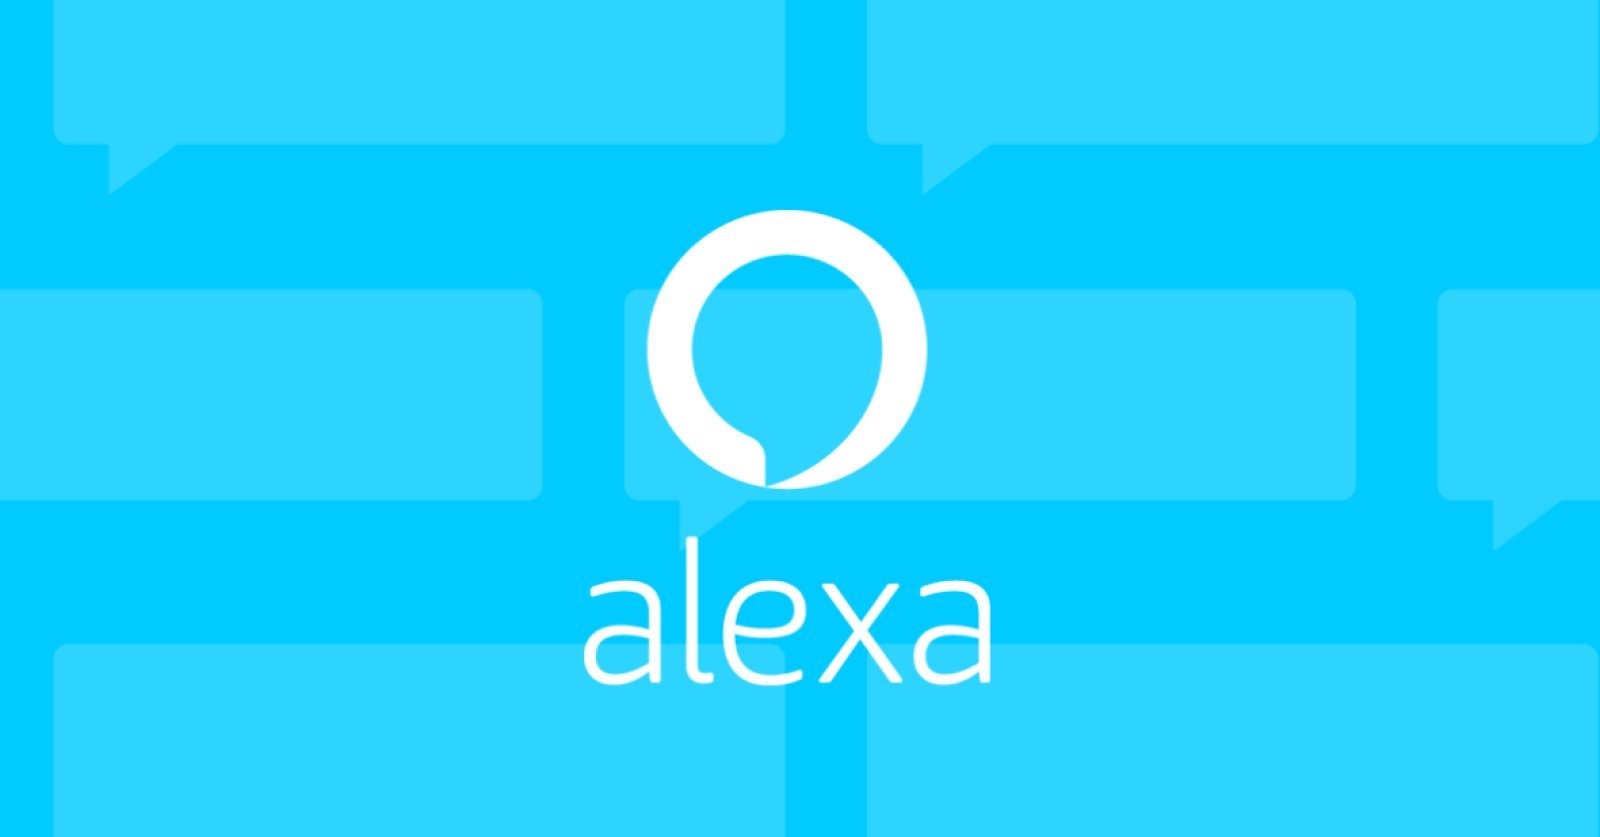 download alexa app for windows 8.1 pc